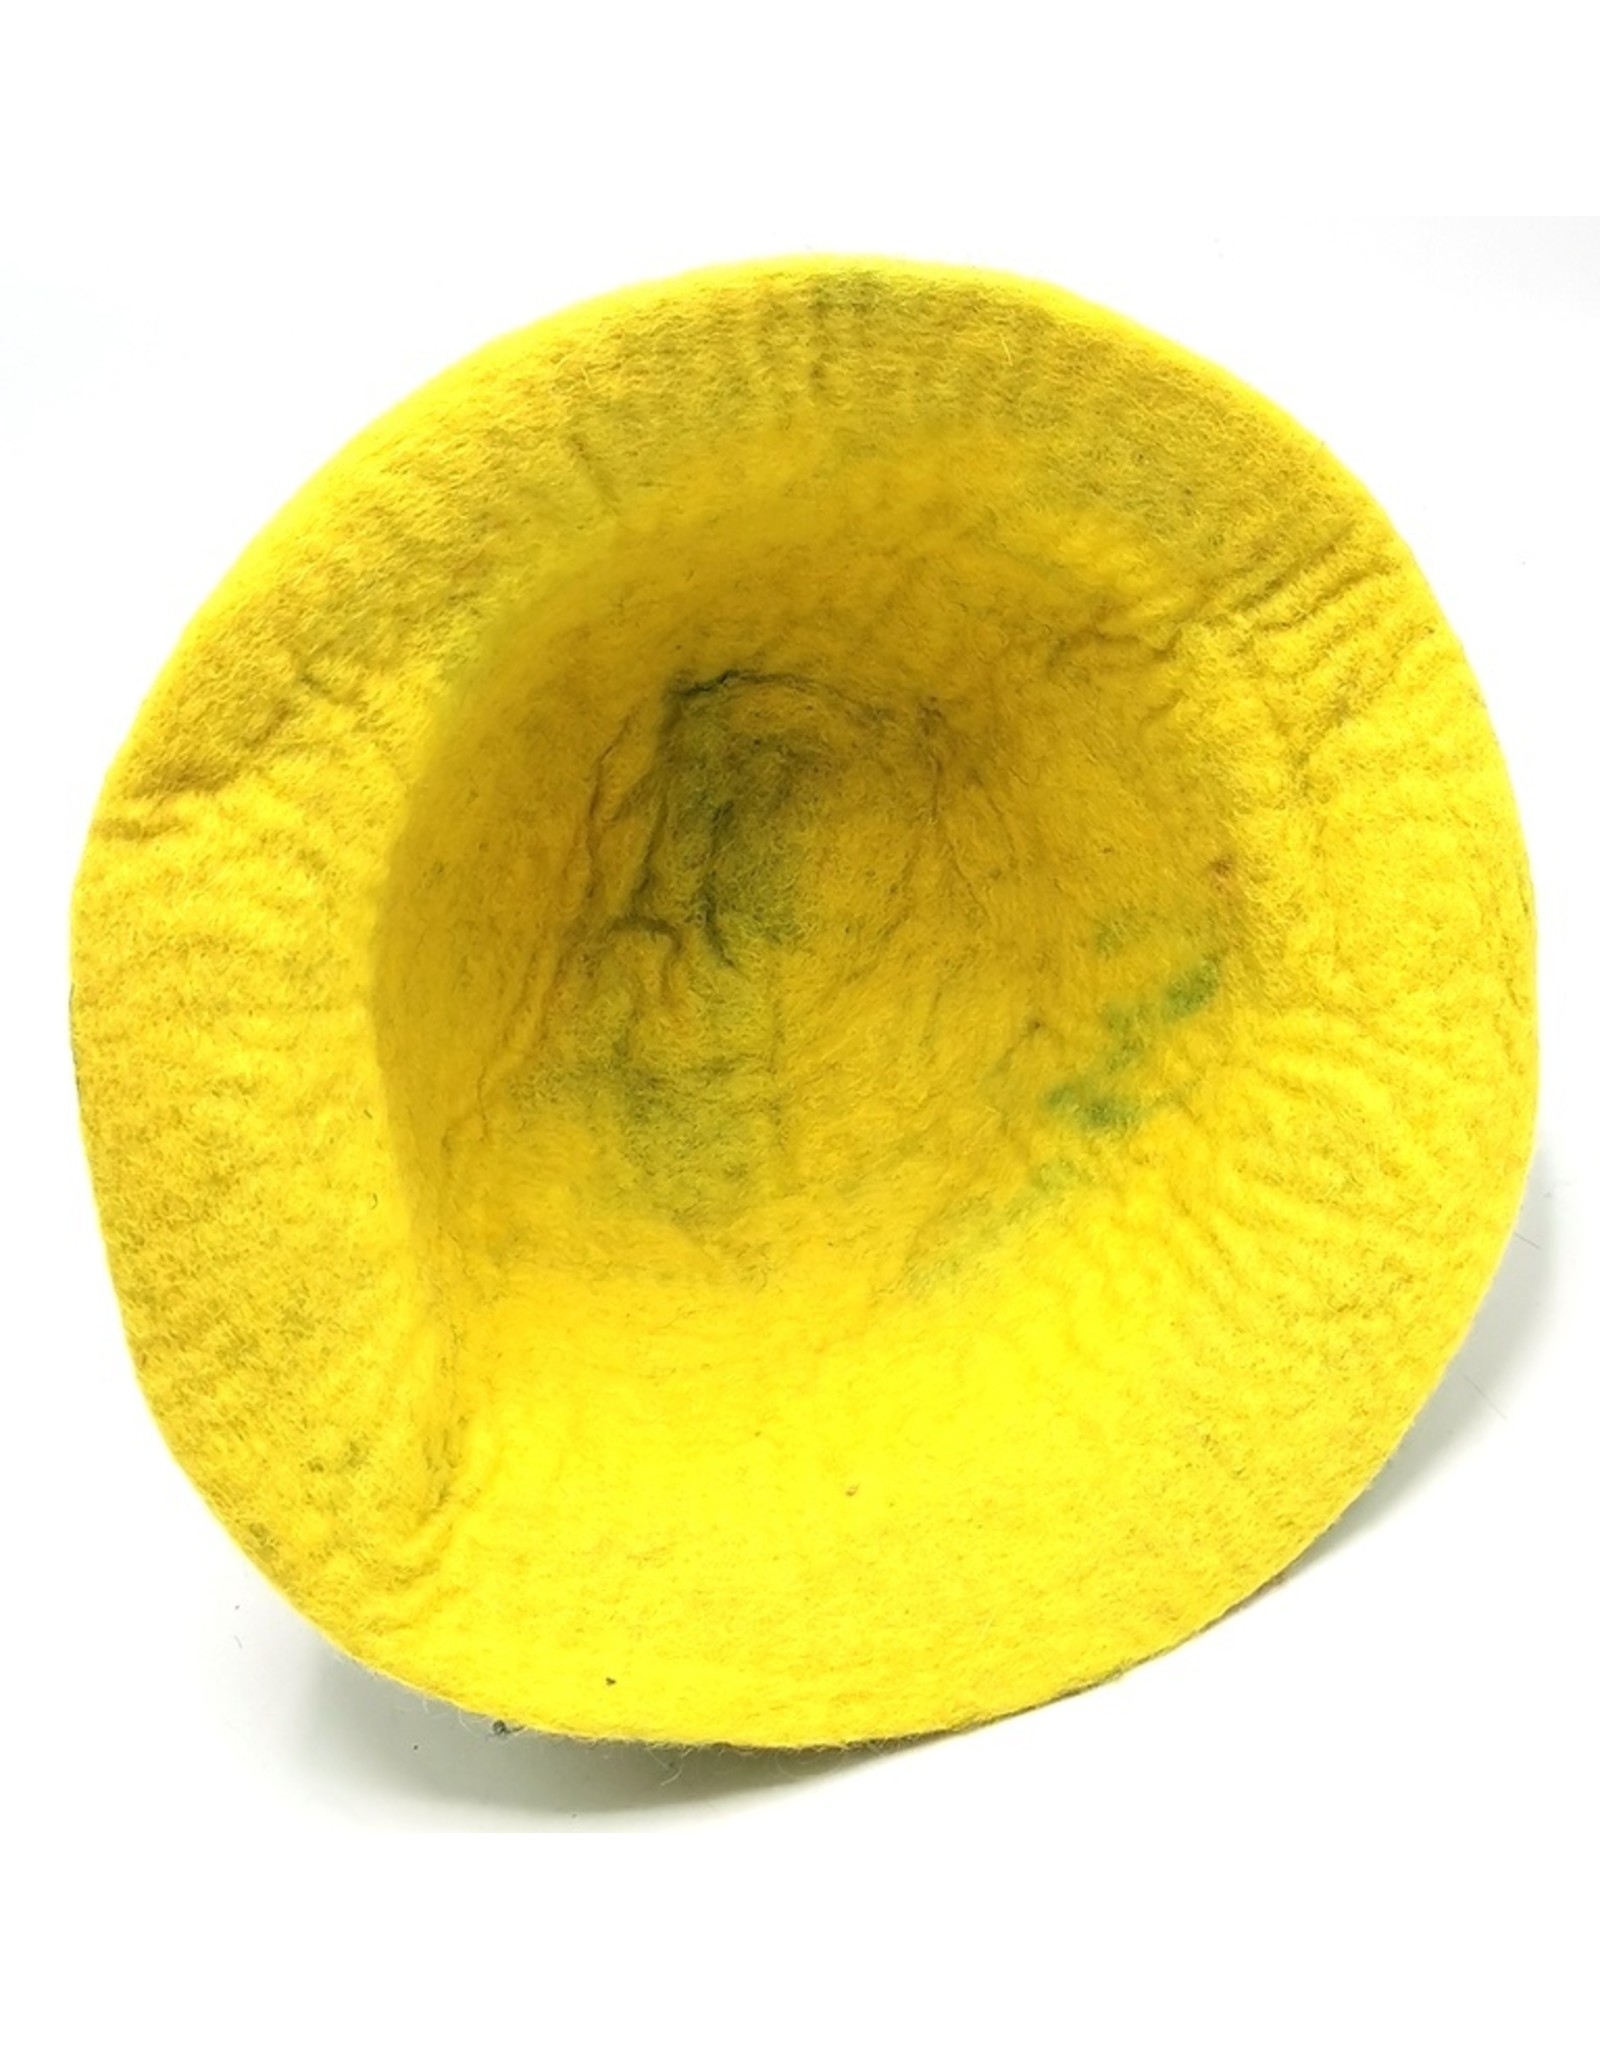 Trukado Miscellaneous - Felt hat "Pineapple" hand felted 100% wool